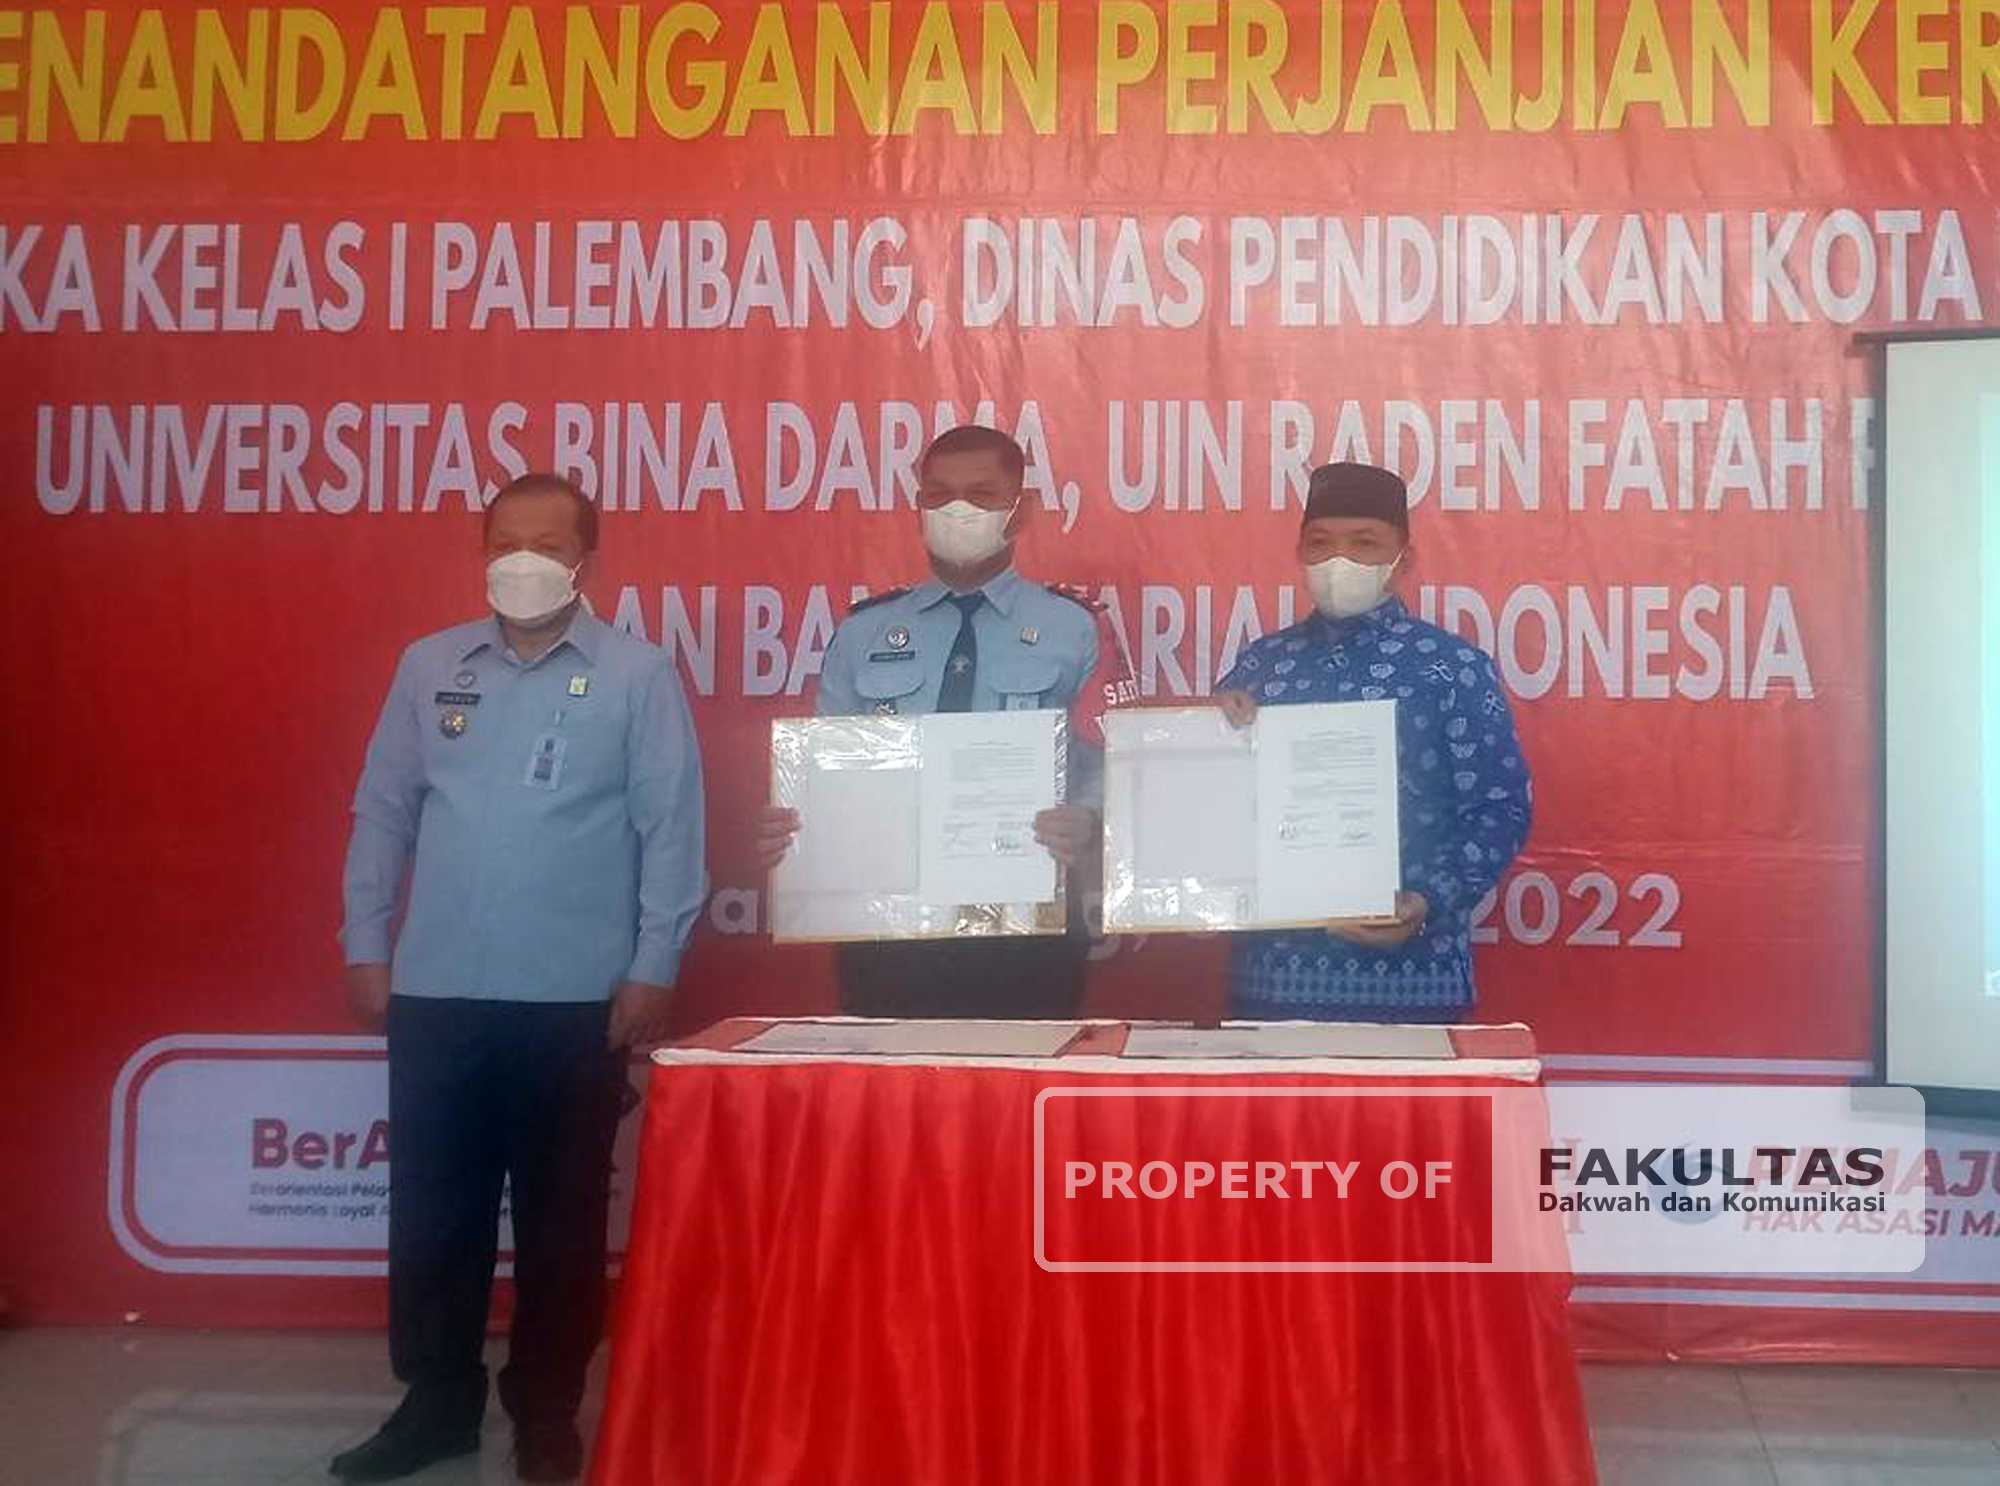 FDK UIN Jalin MoU Bersama LPKA Klas I Palembang